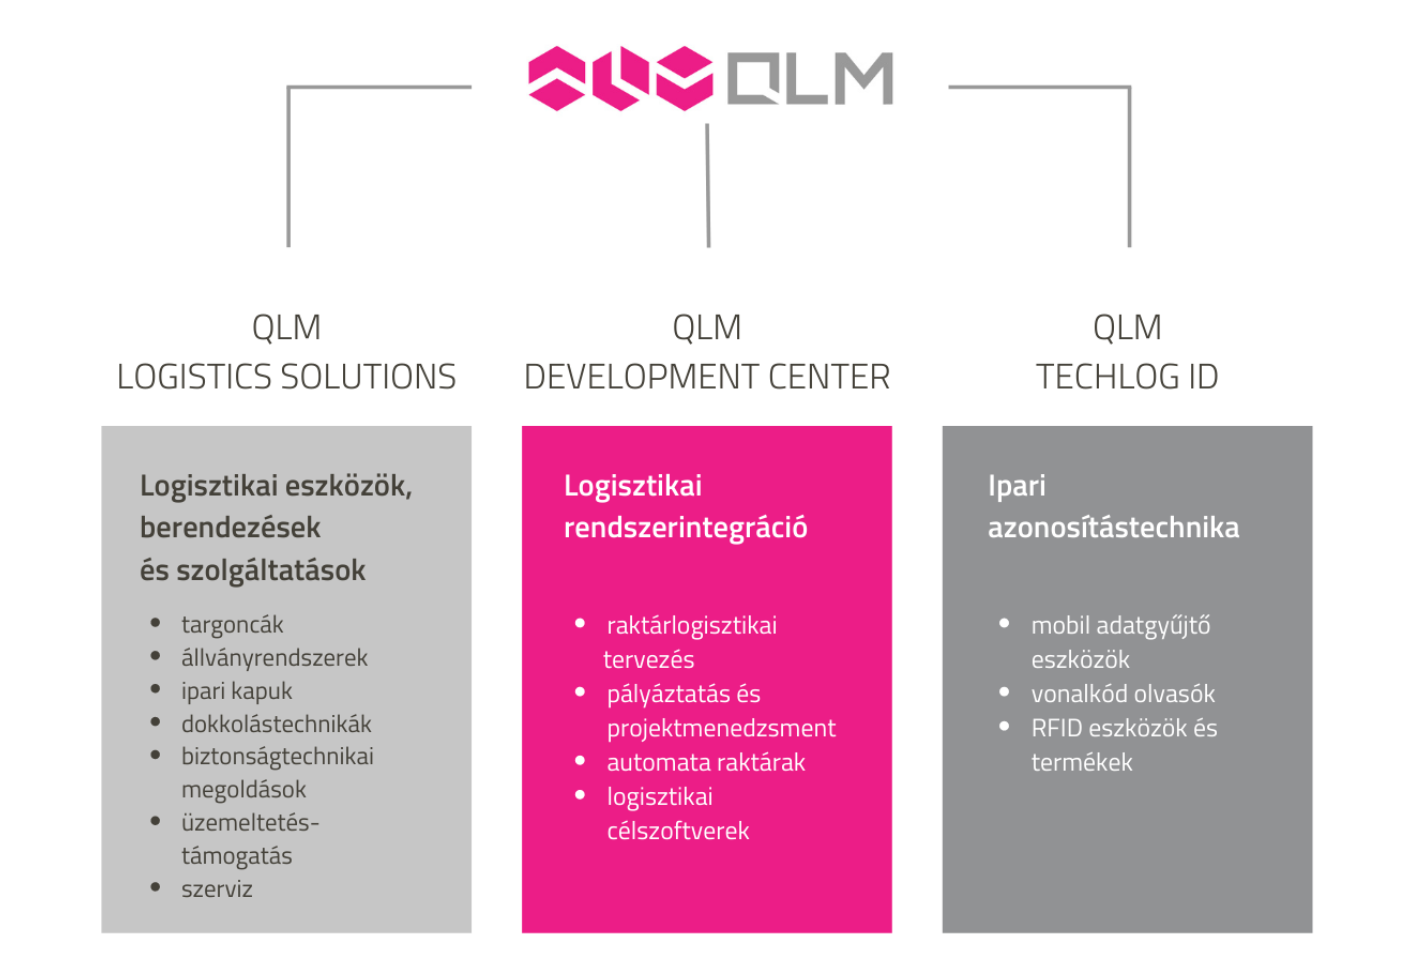 a qlm cégcsoport, qlm logistics solutions. qlm development center, qlm techlog id